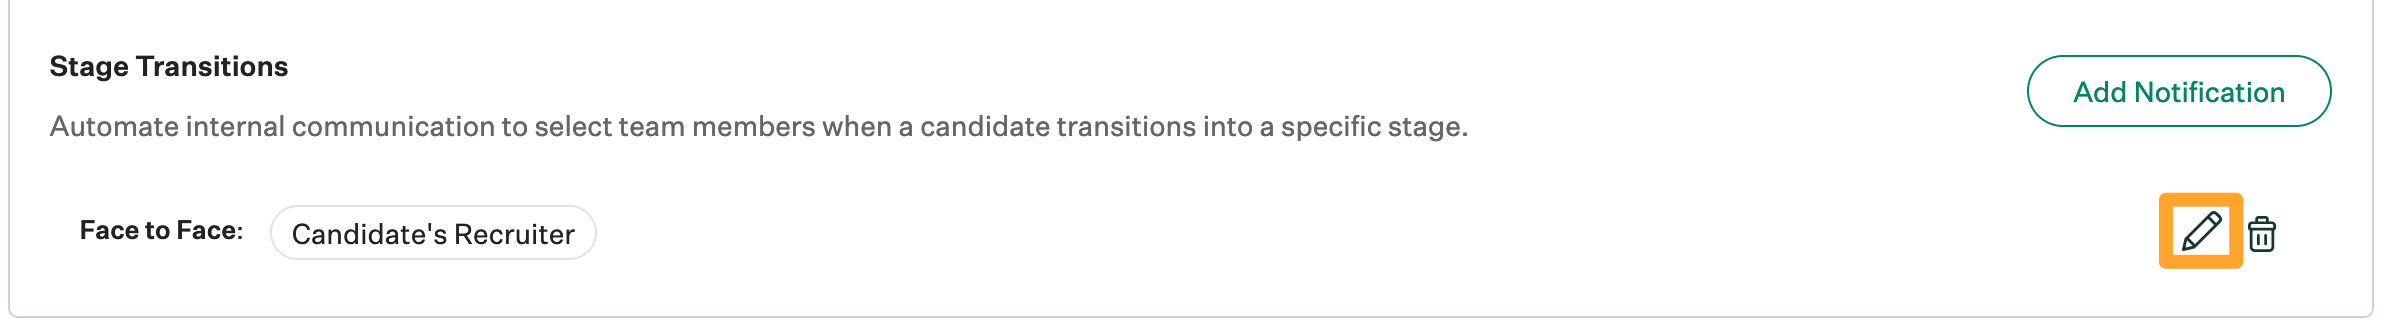 Screenshot of edit stage transition notification